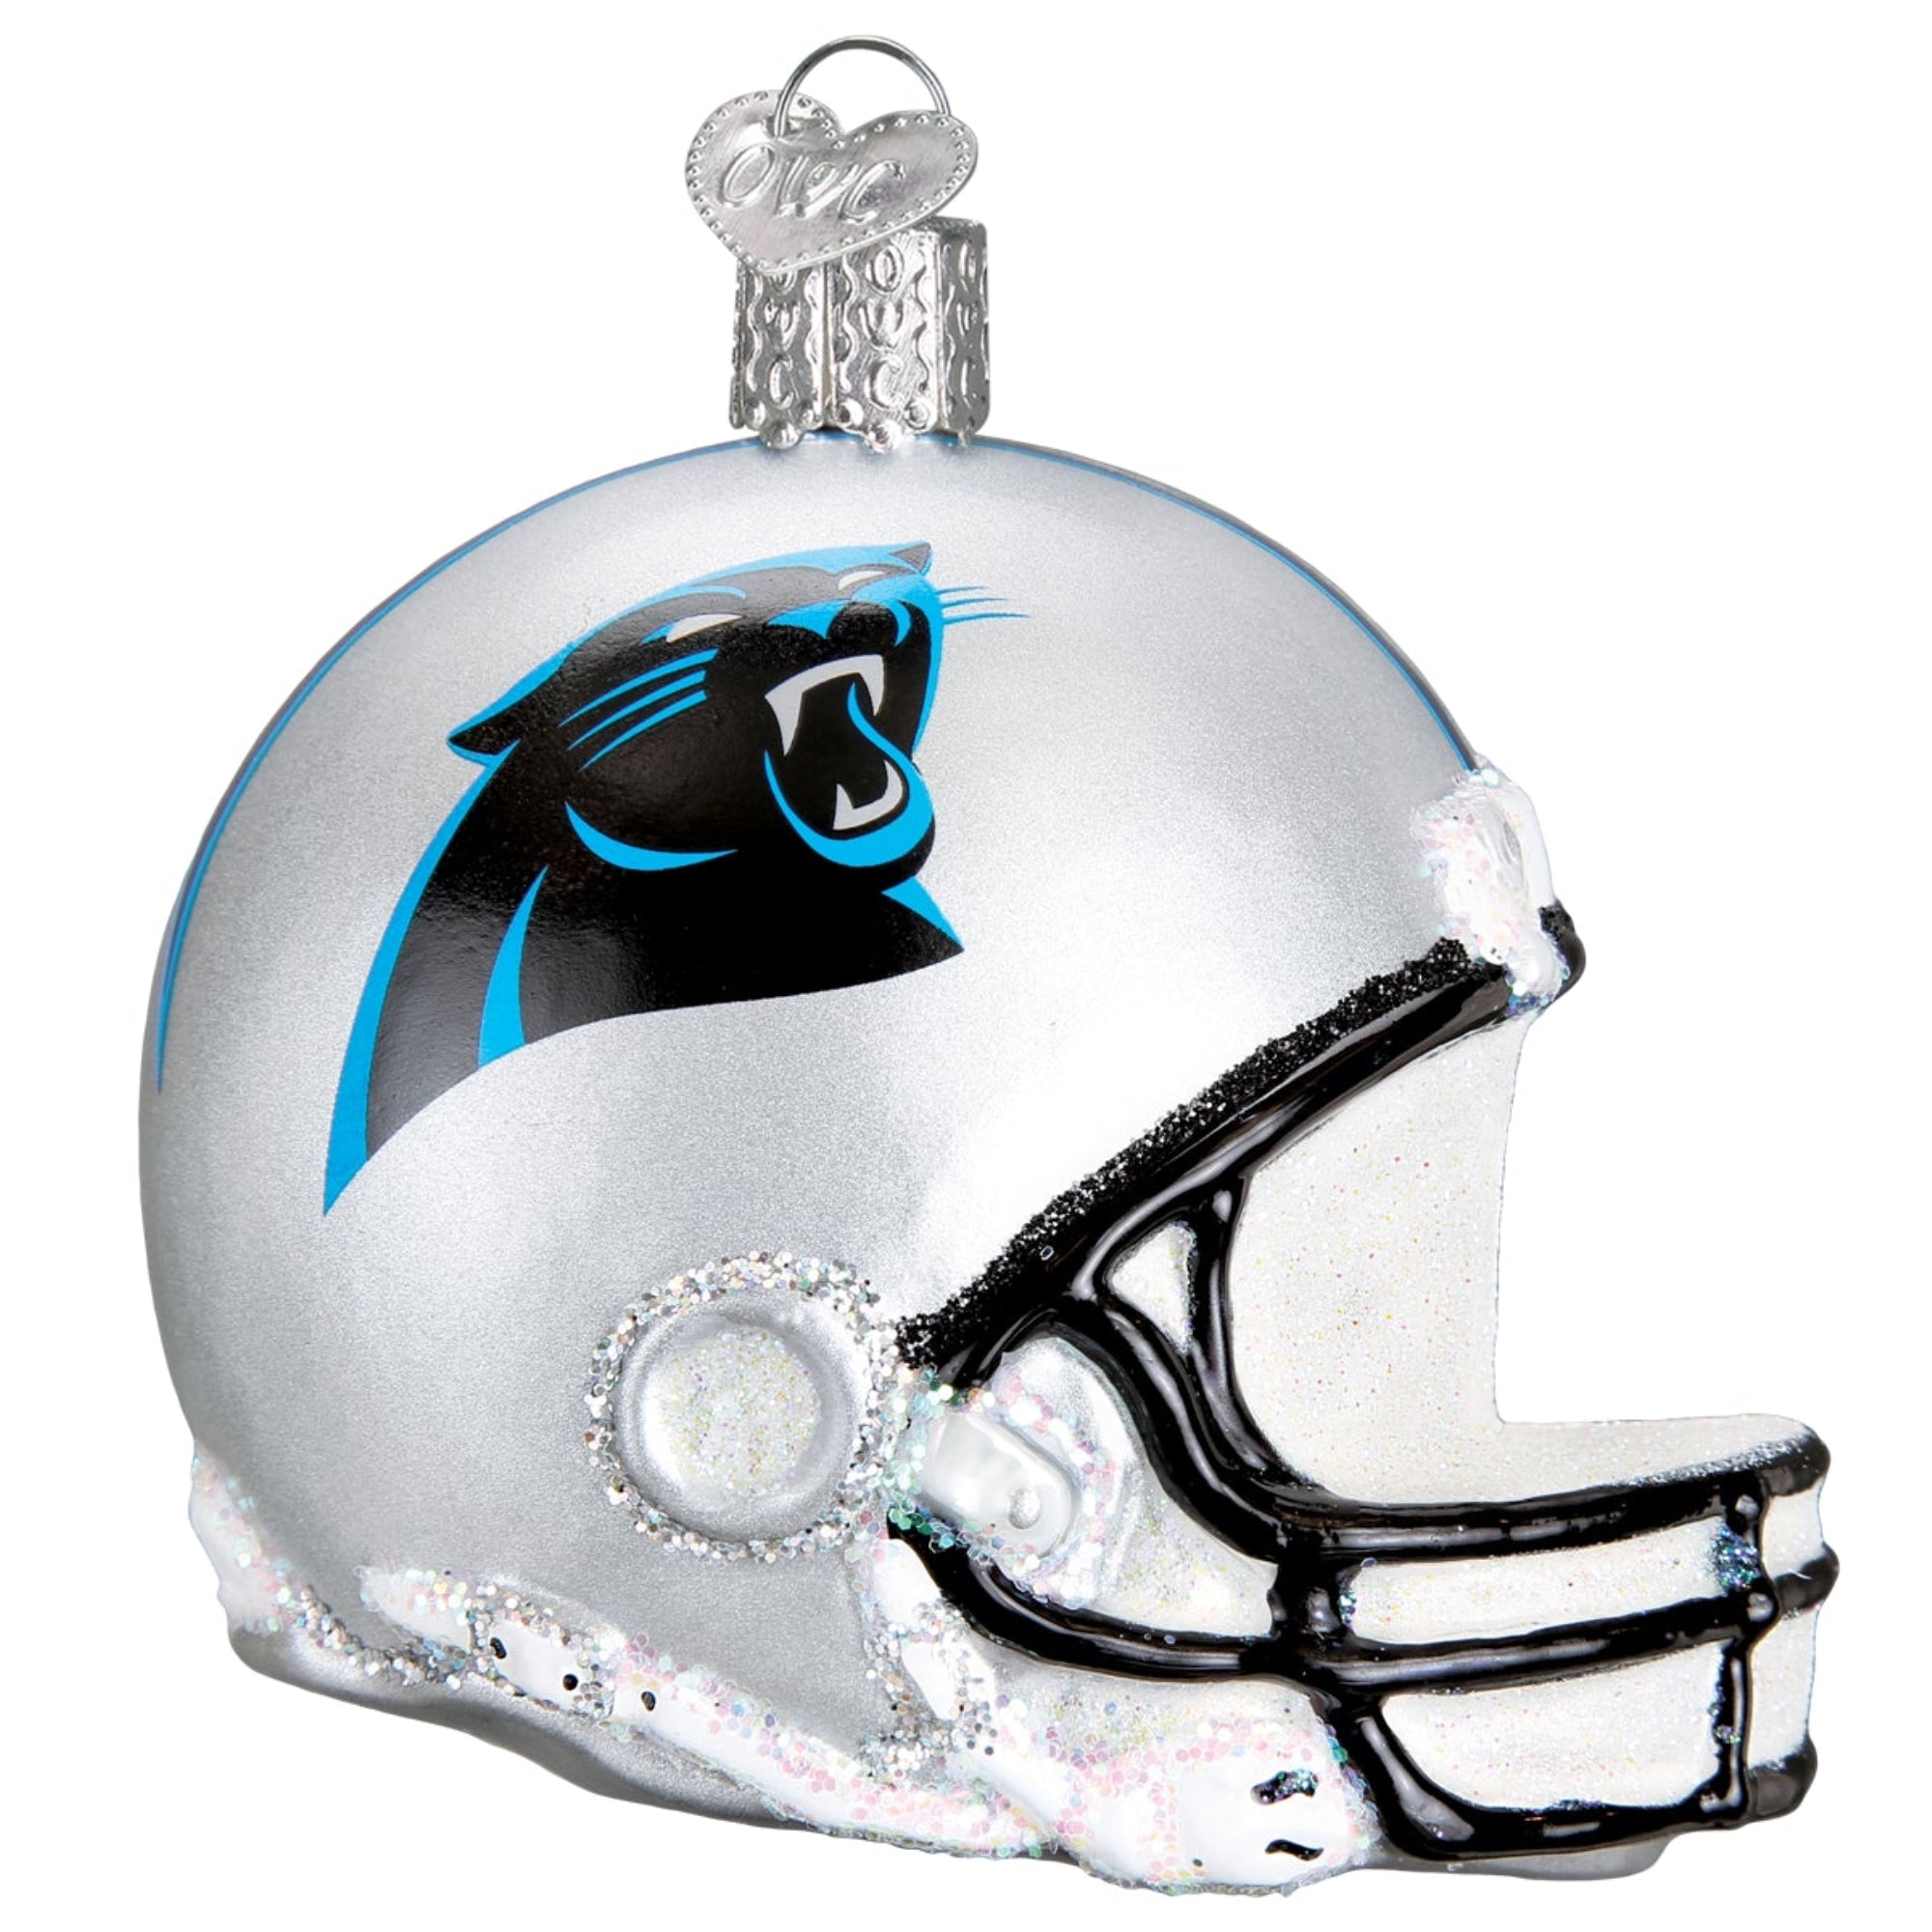 Old World Blown Glass Christmas Ornament, Carolina Panthers Helmet